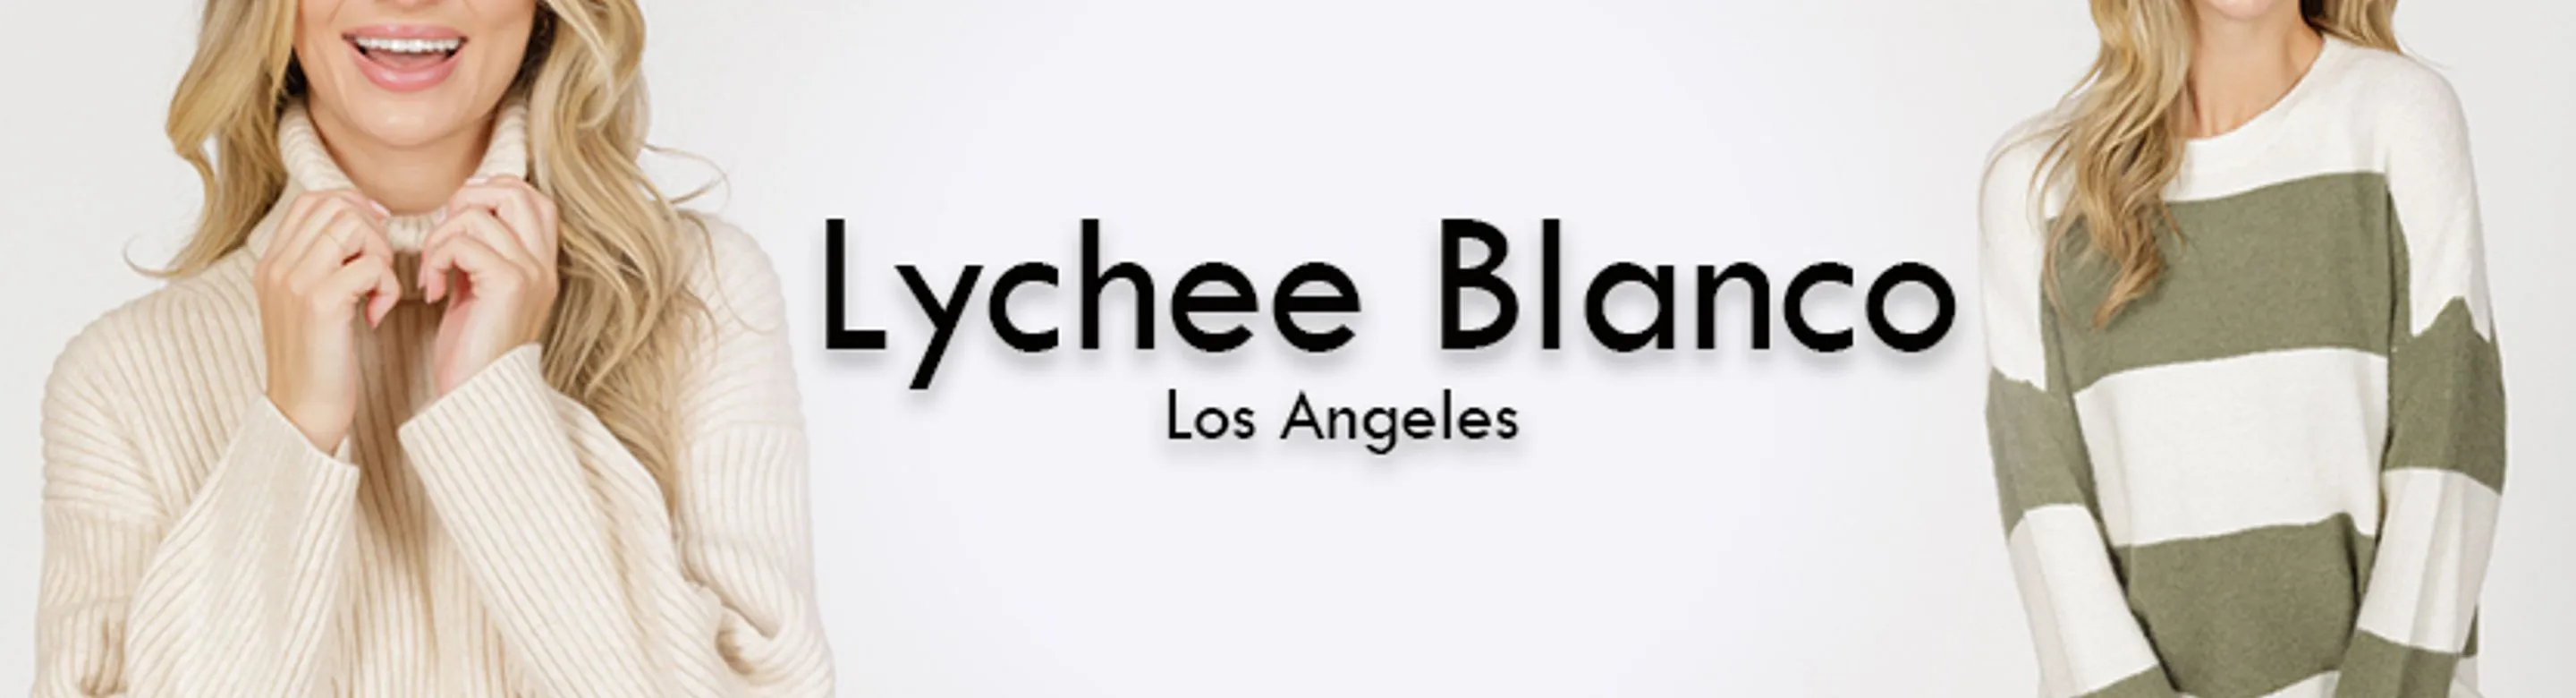 Lychee Blanco